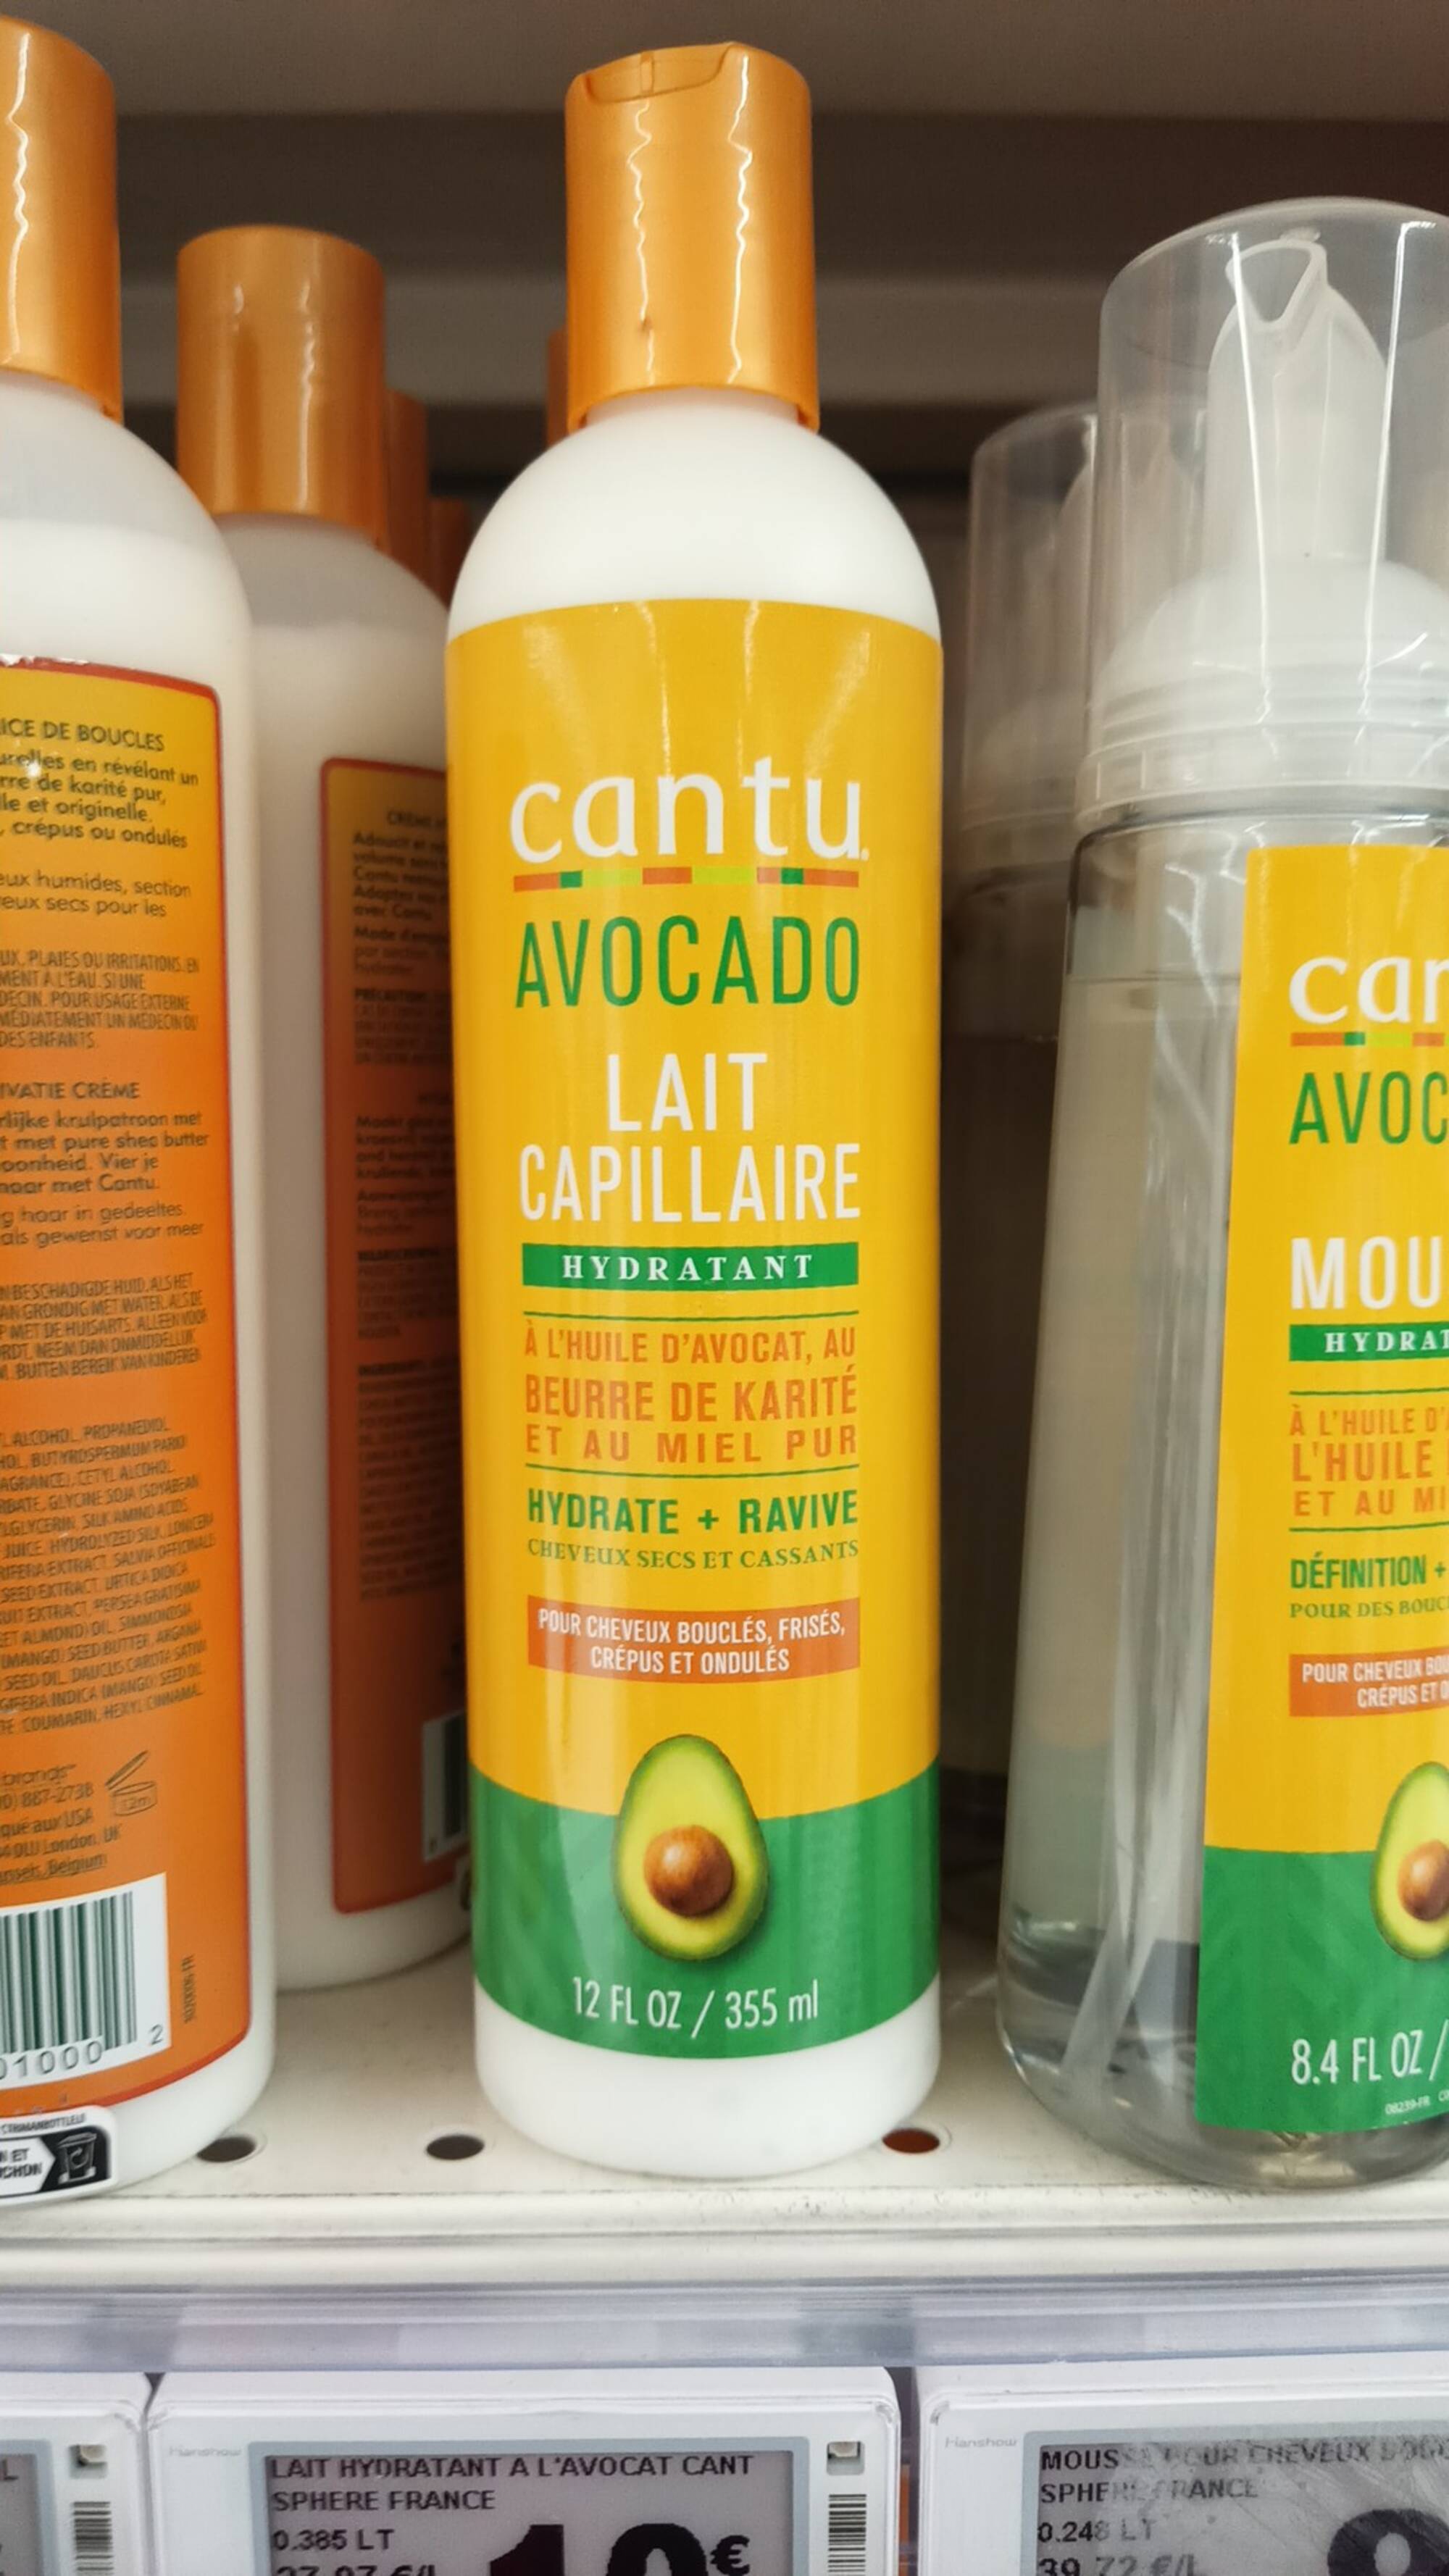 CANTU - Avocado - Lait capillaire hydratant